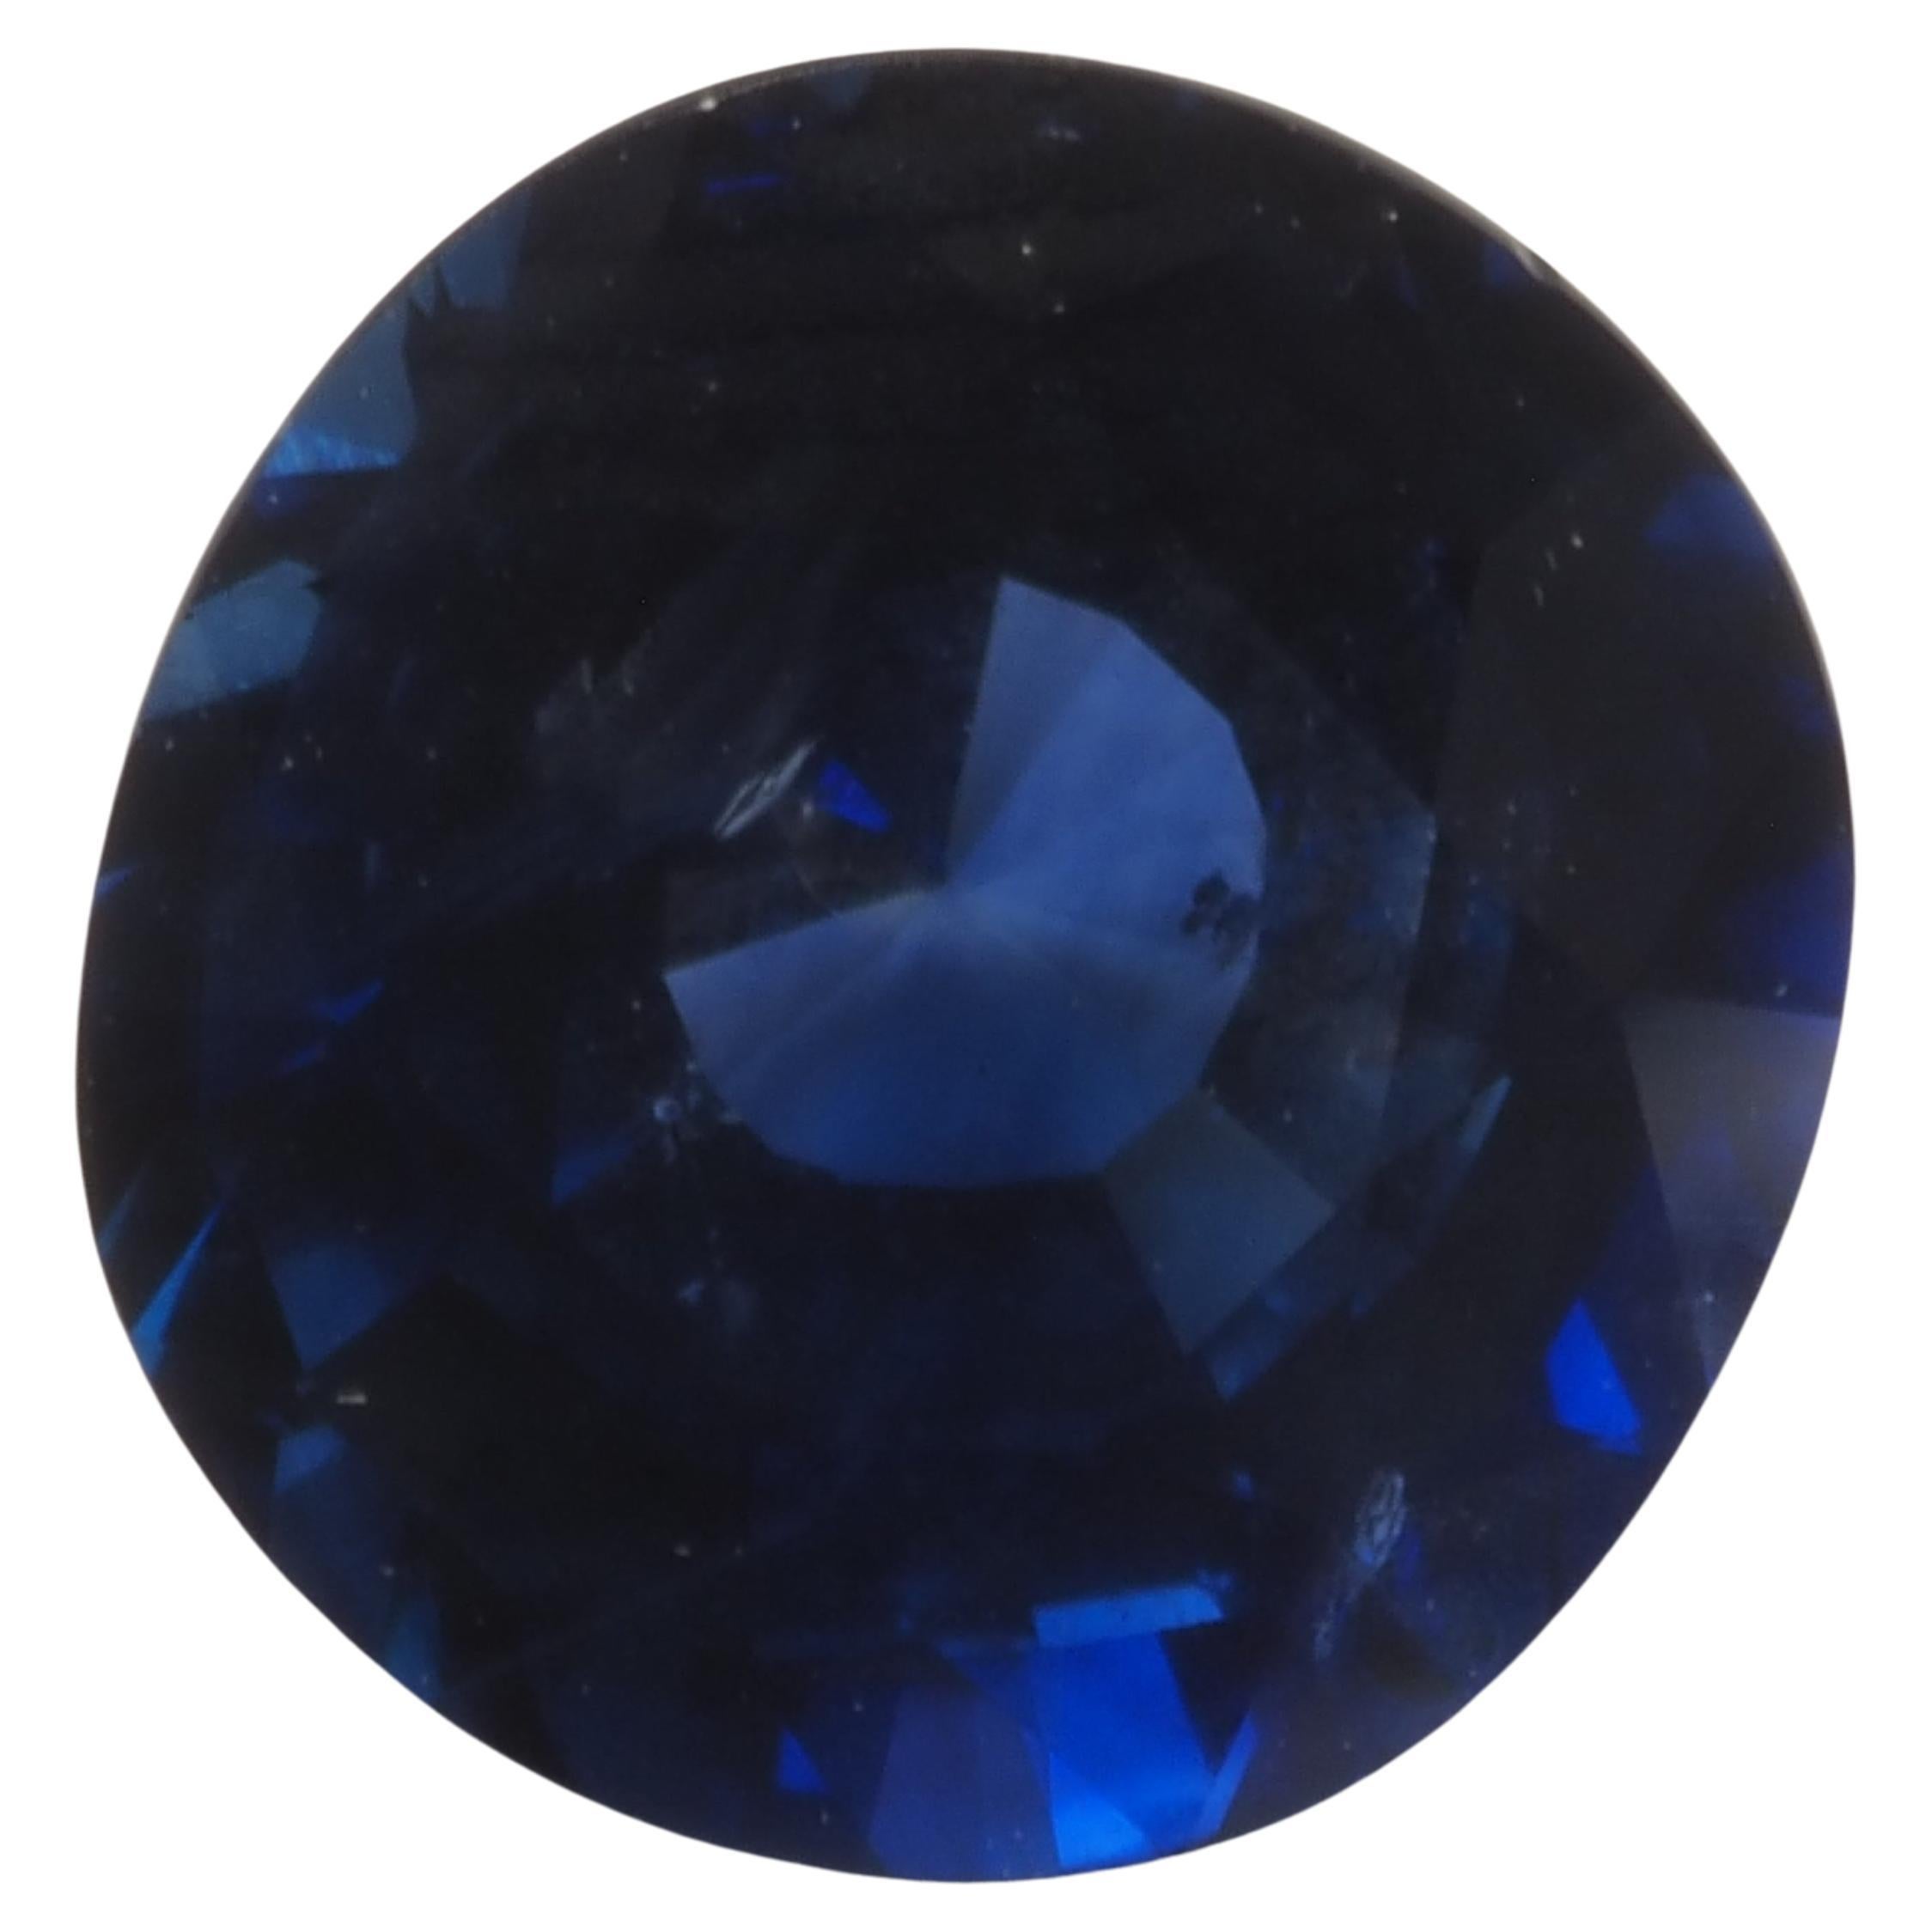 Loose Gemstones at Auction